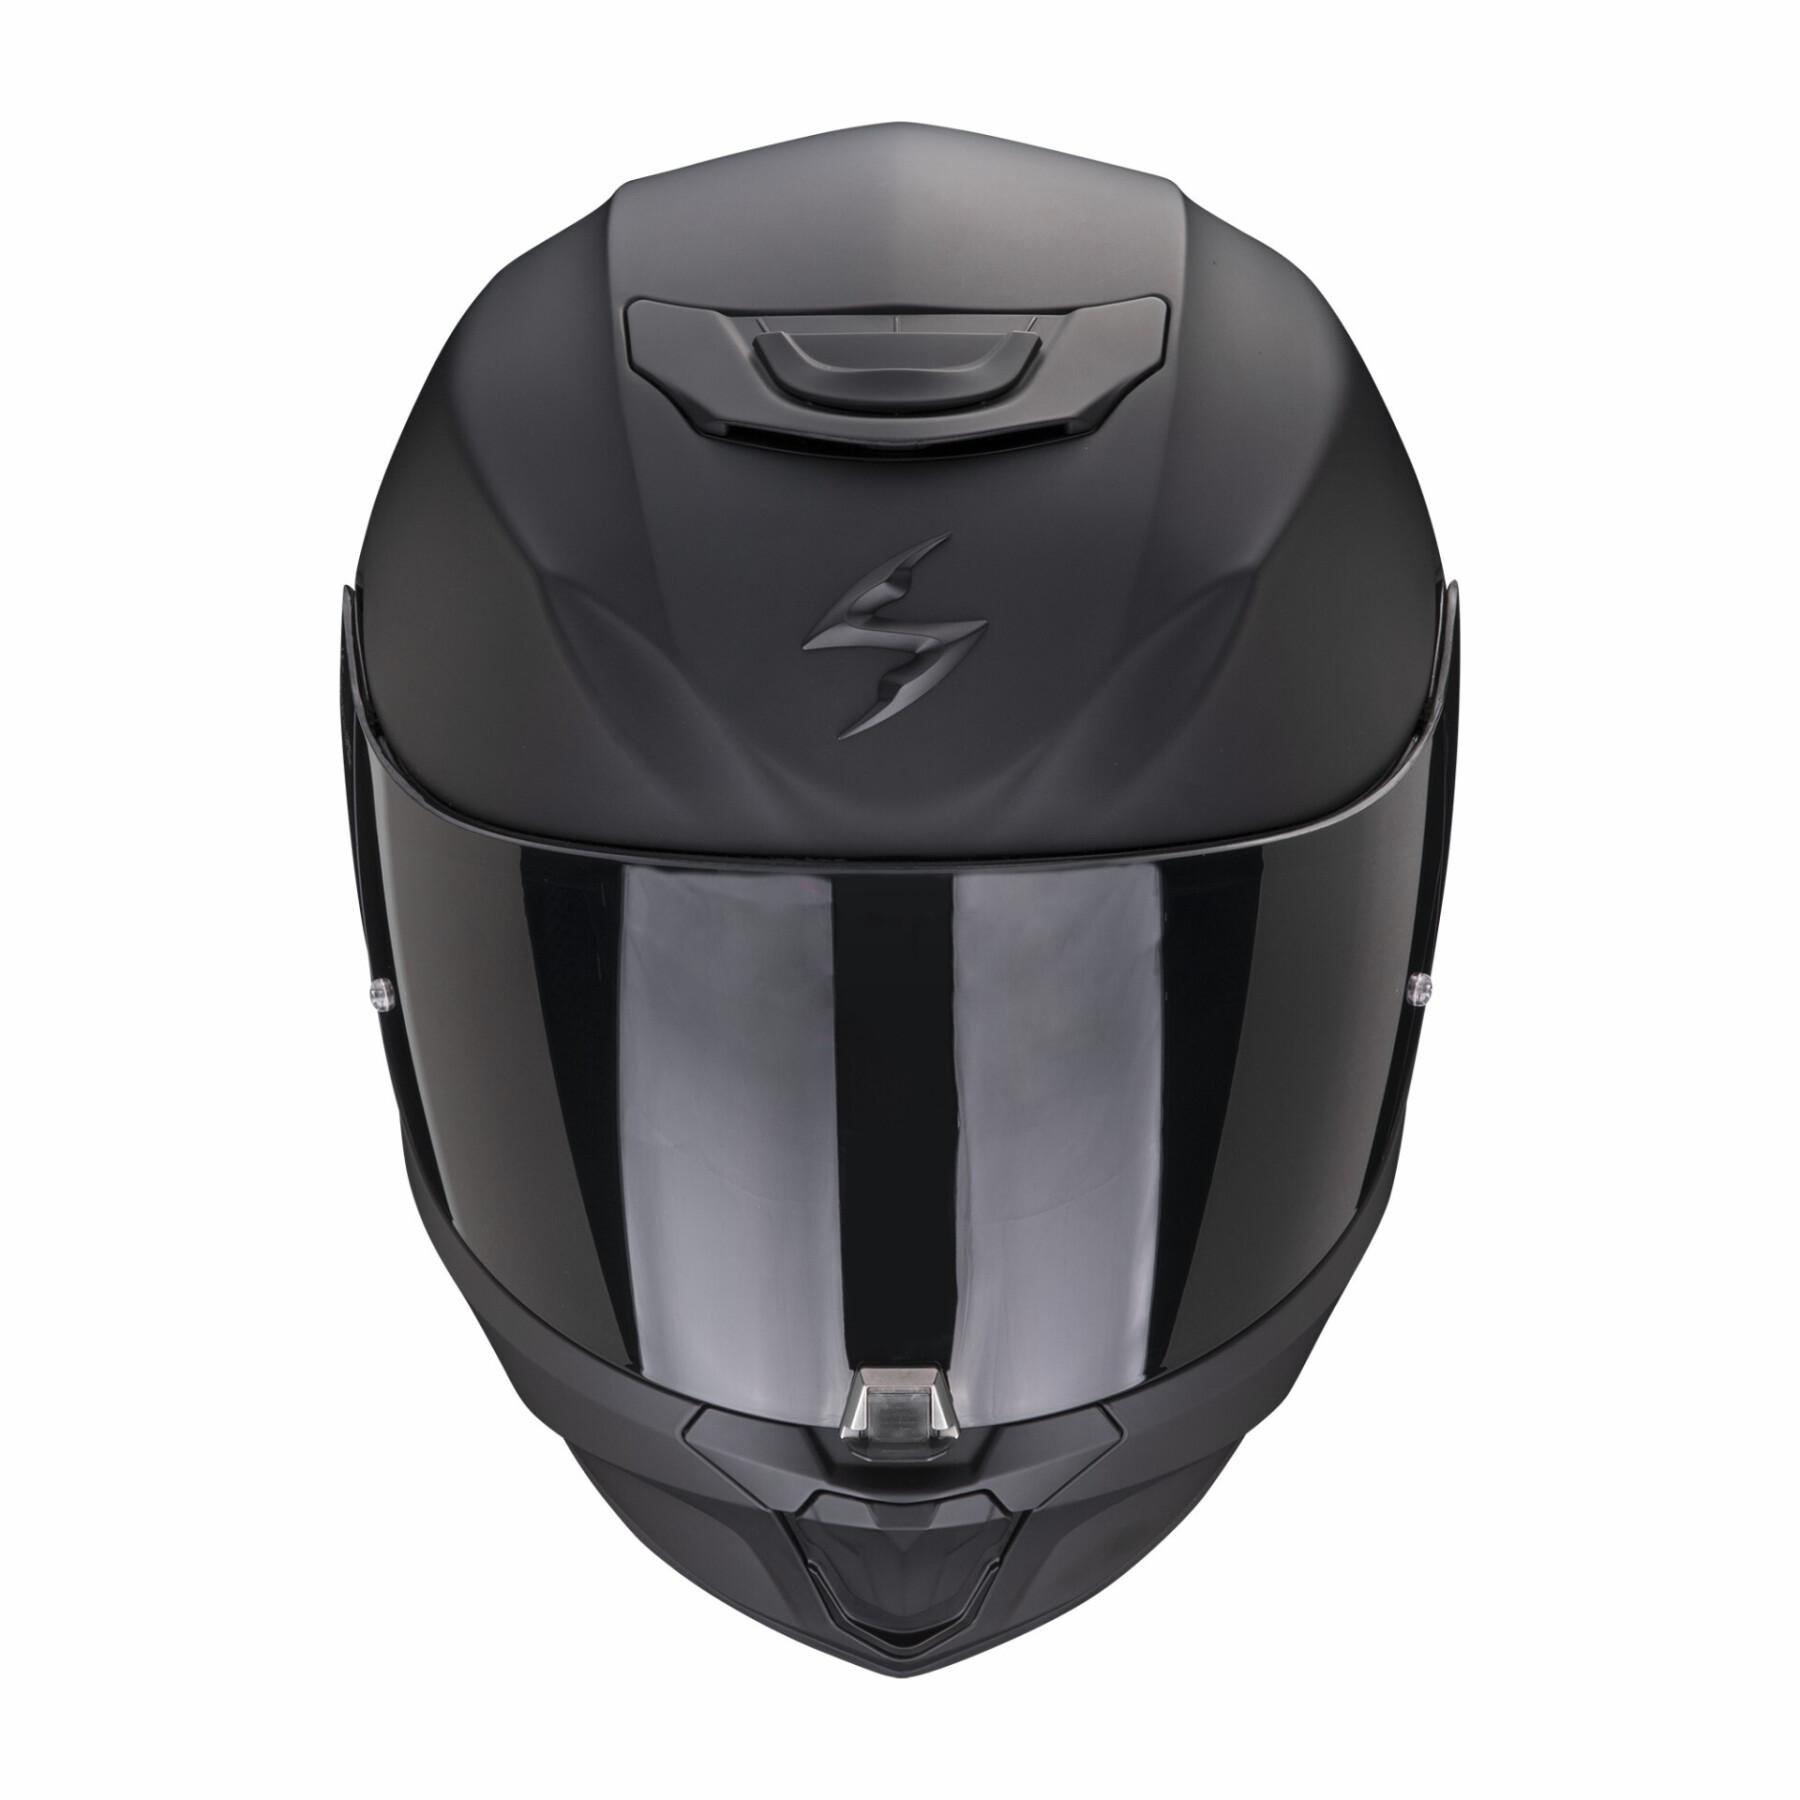 Full face motorcycle helmet Scorpion Exo-391 Solid ECE 22-06